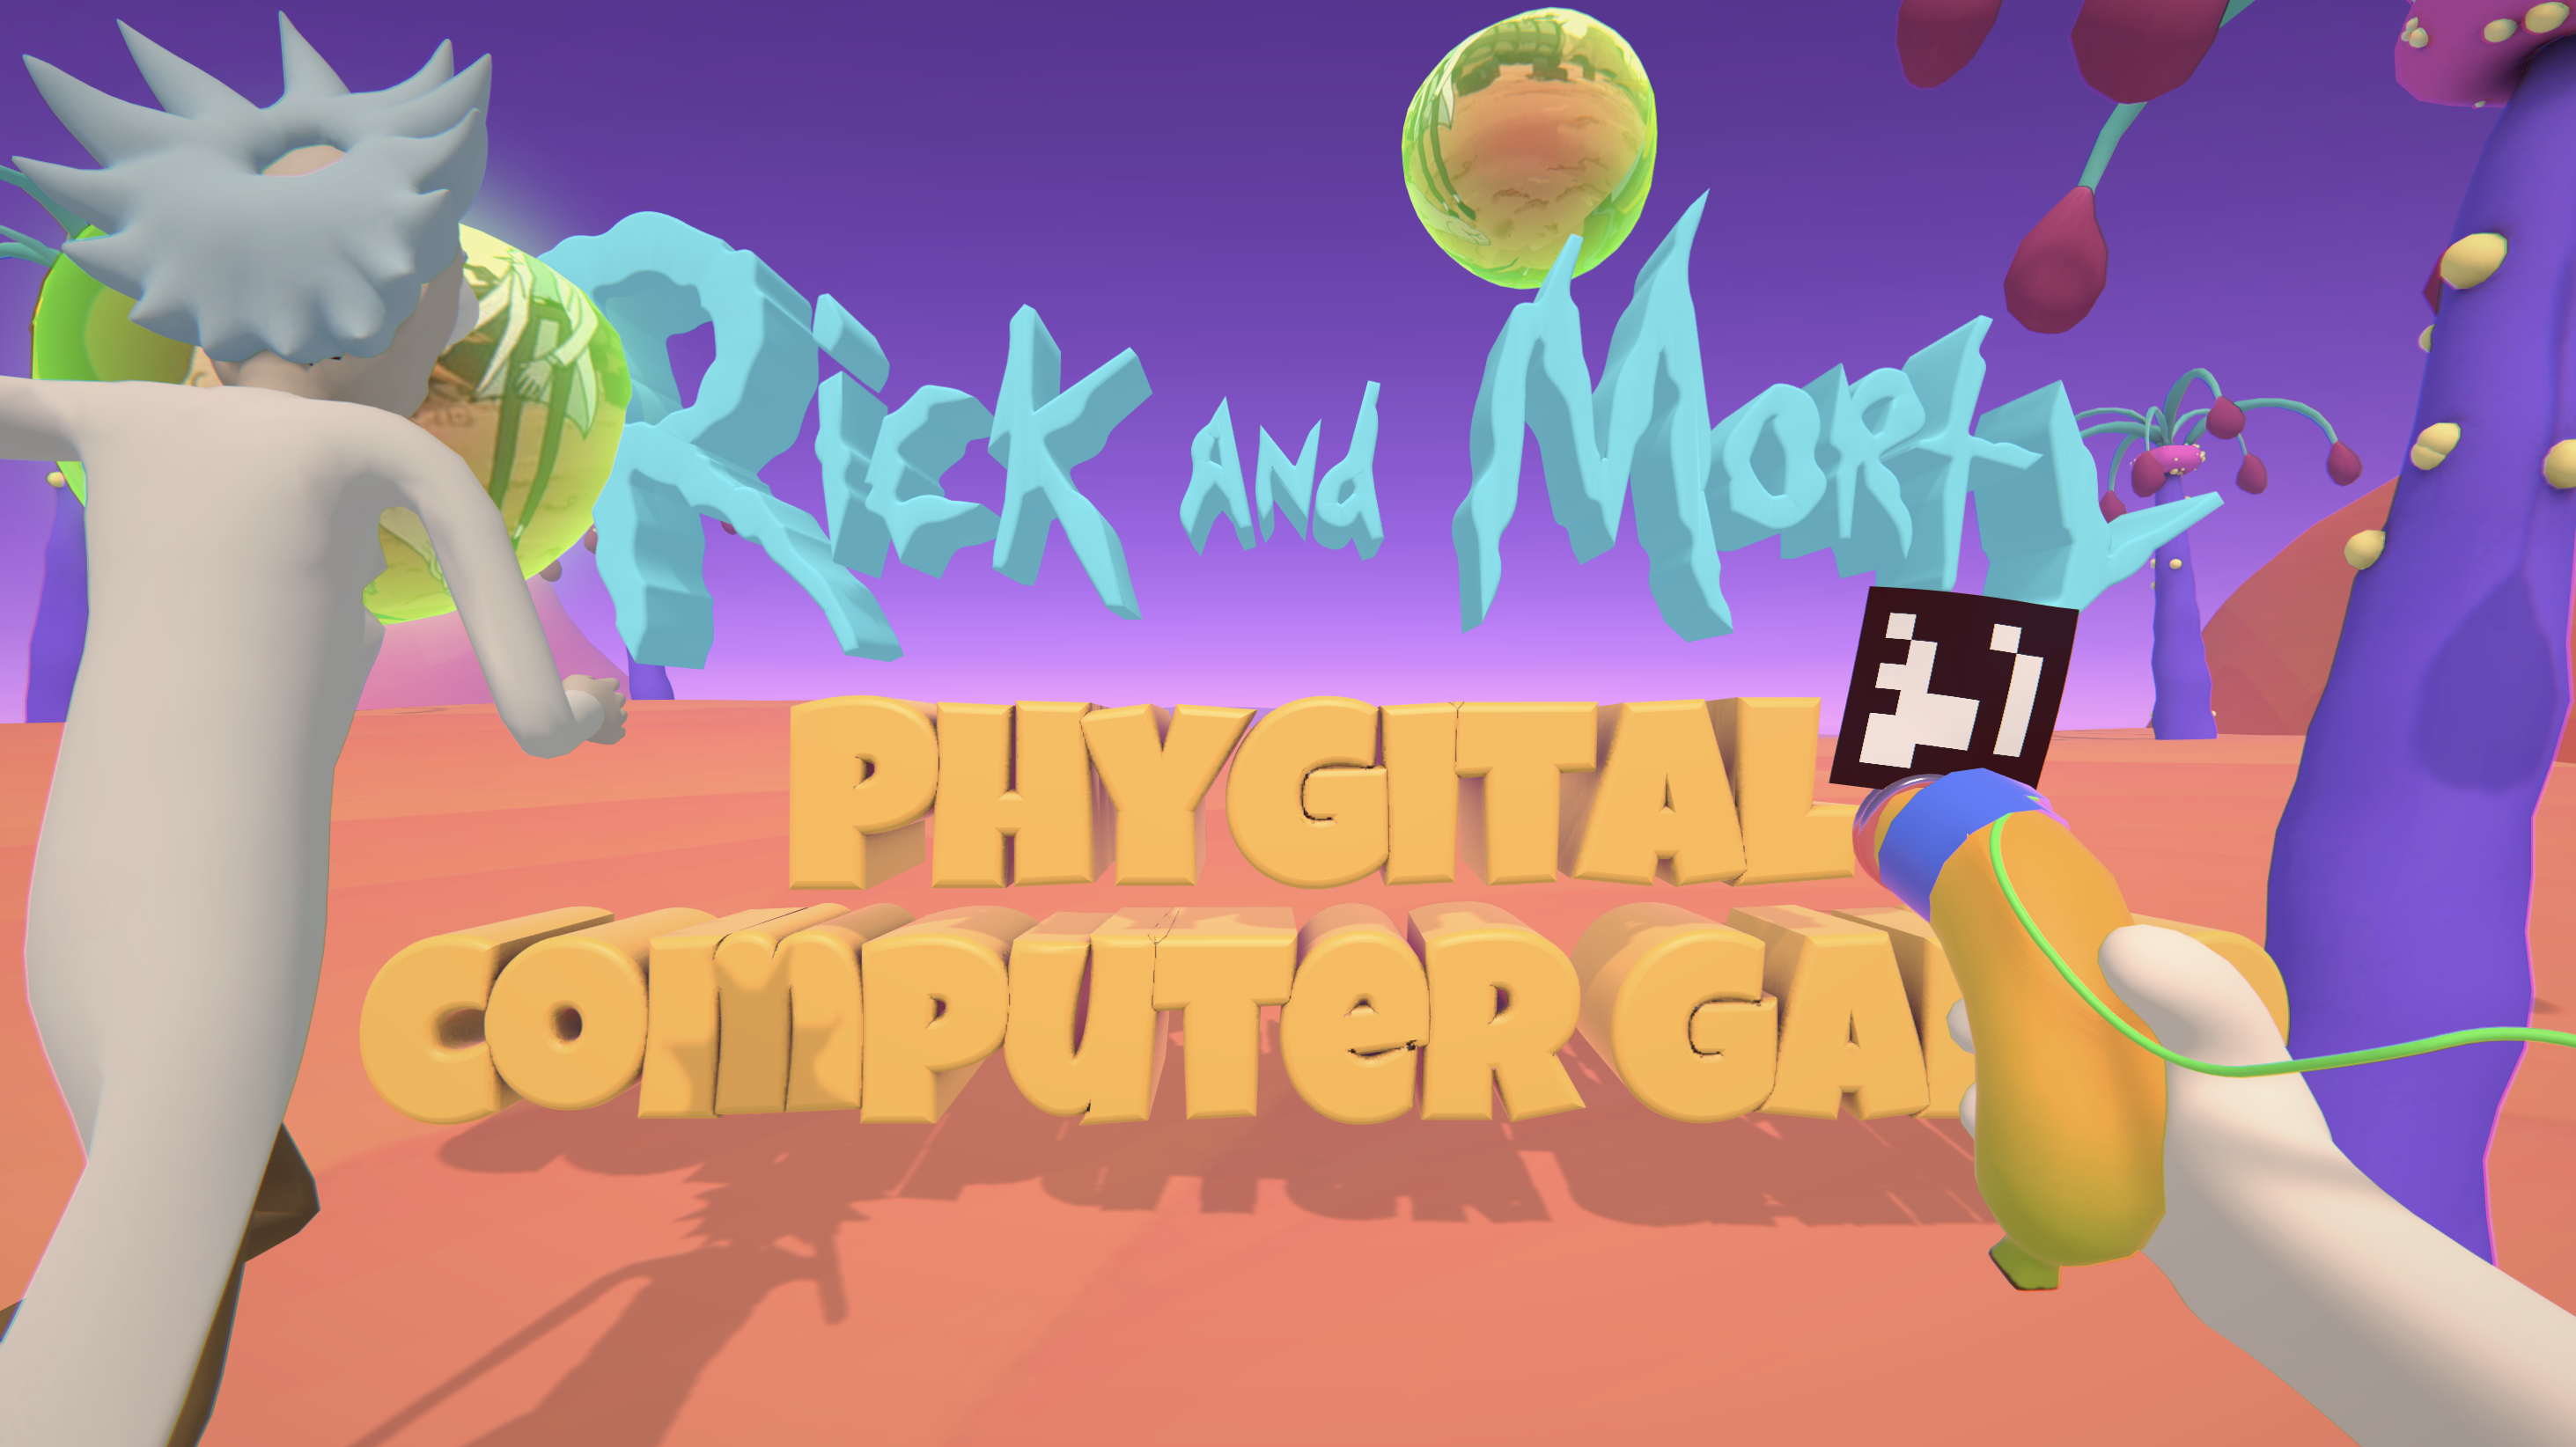 Rick and Morty: Phygital Computer Game